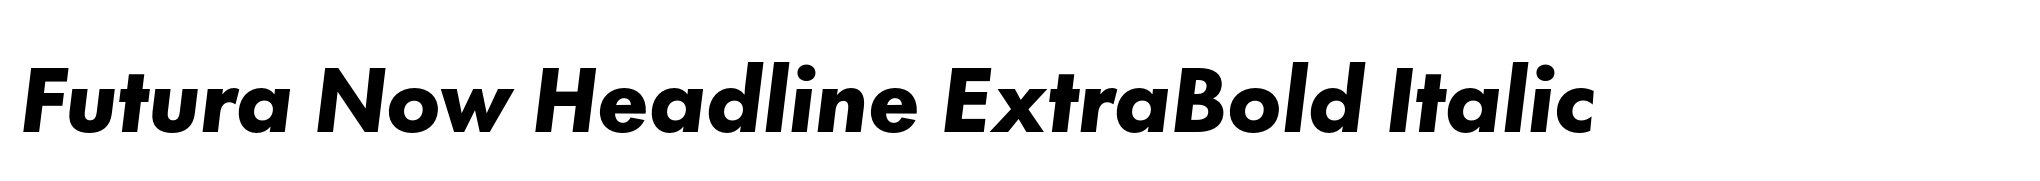 Futura Now Headline ExtraBold Italic image